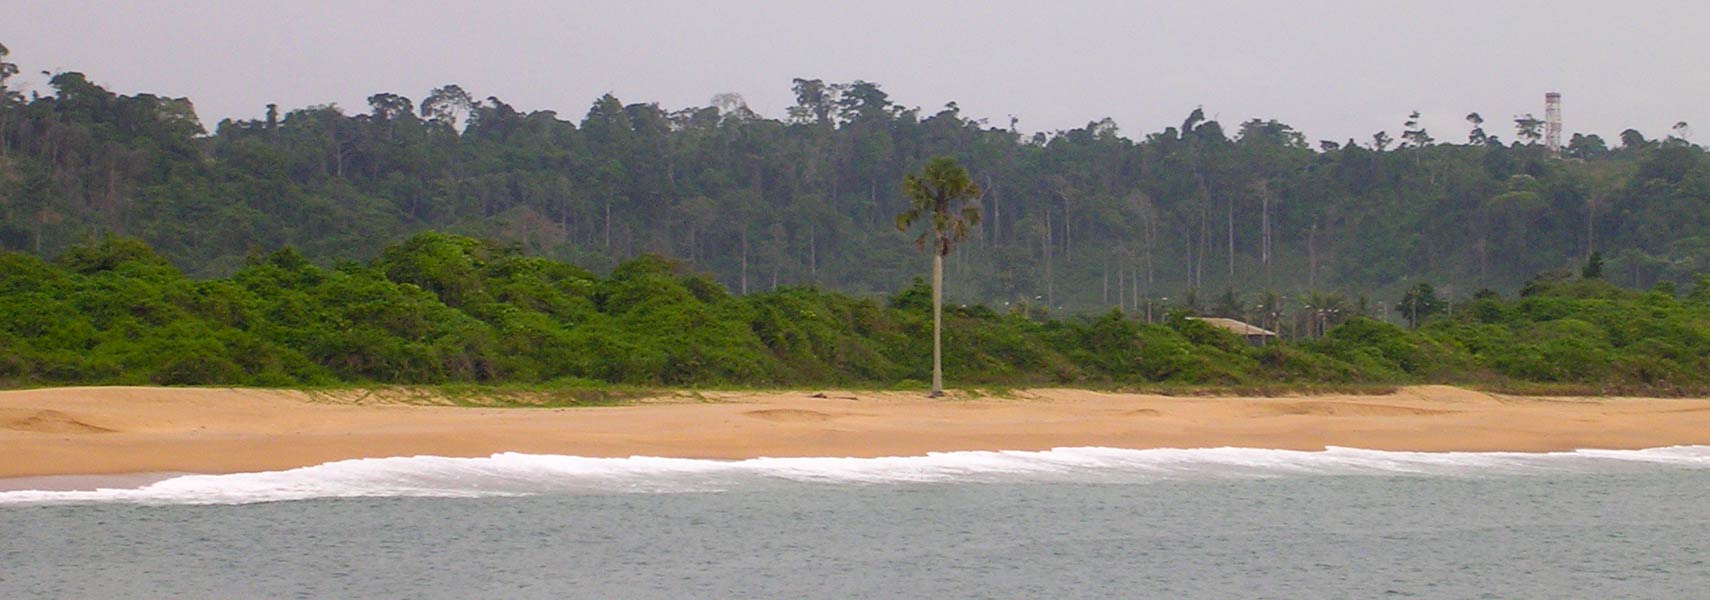 Beach in San Pédro, Ivory Coast